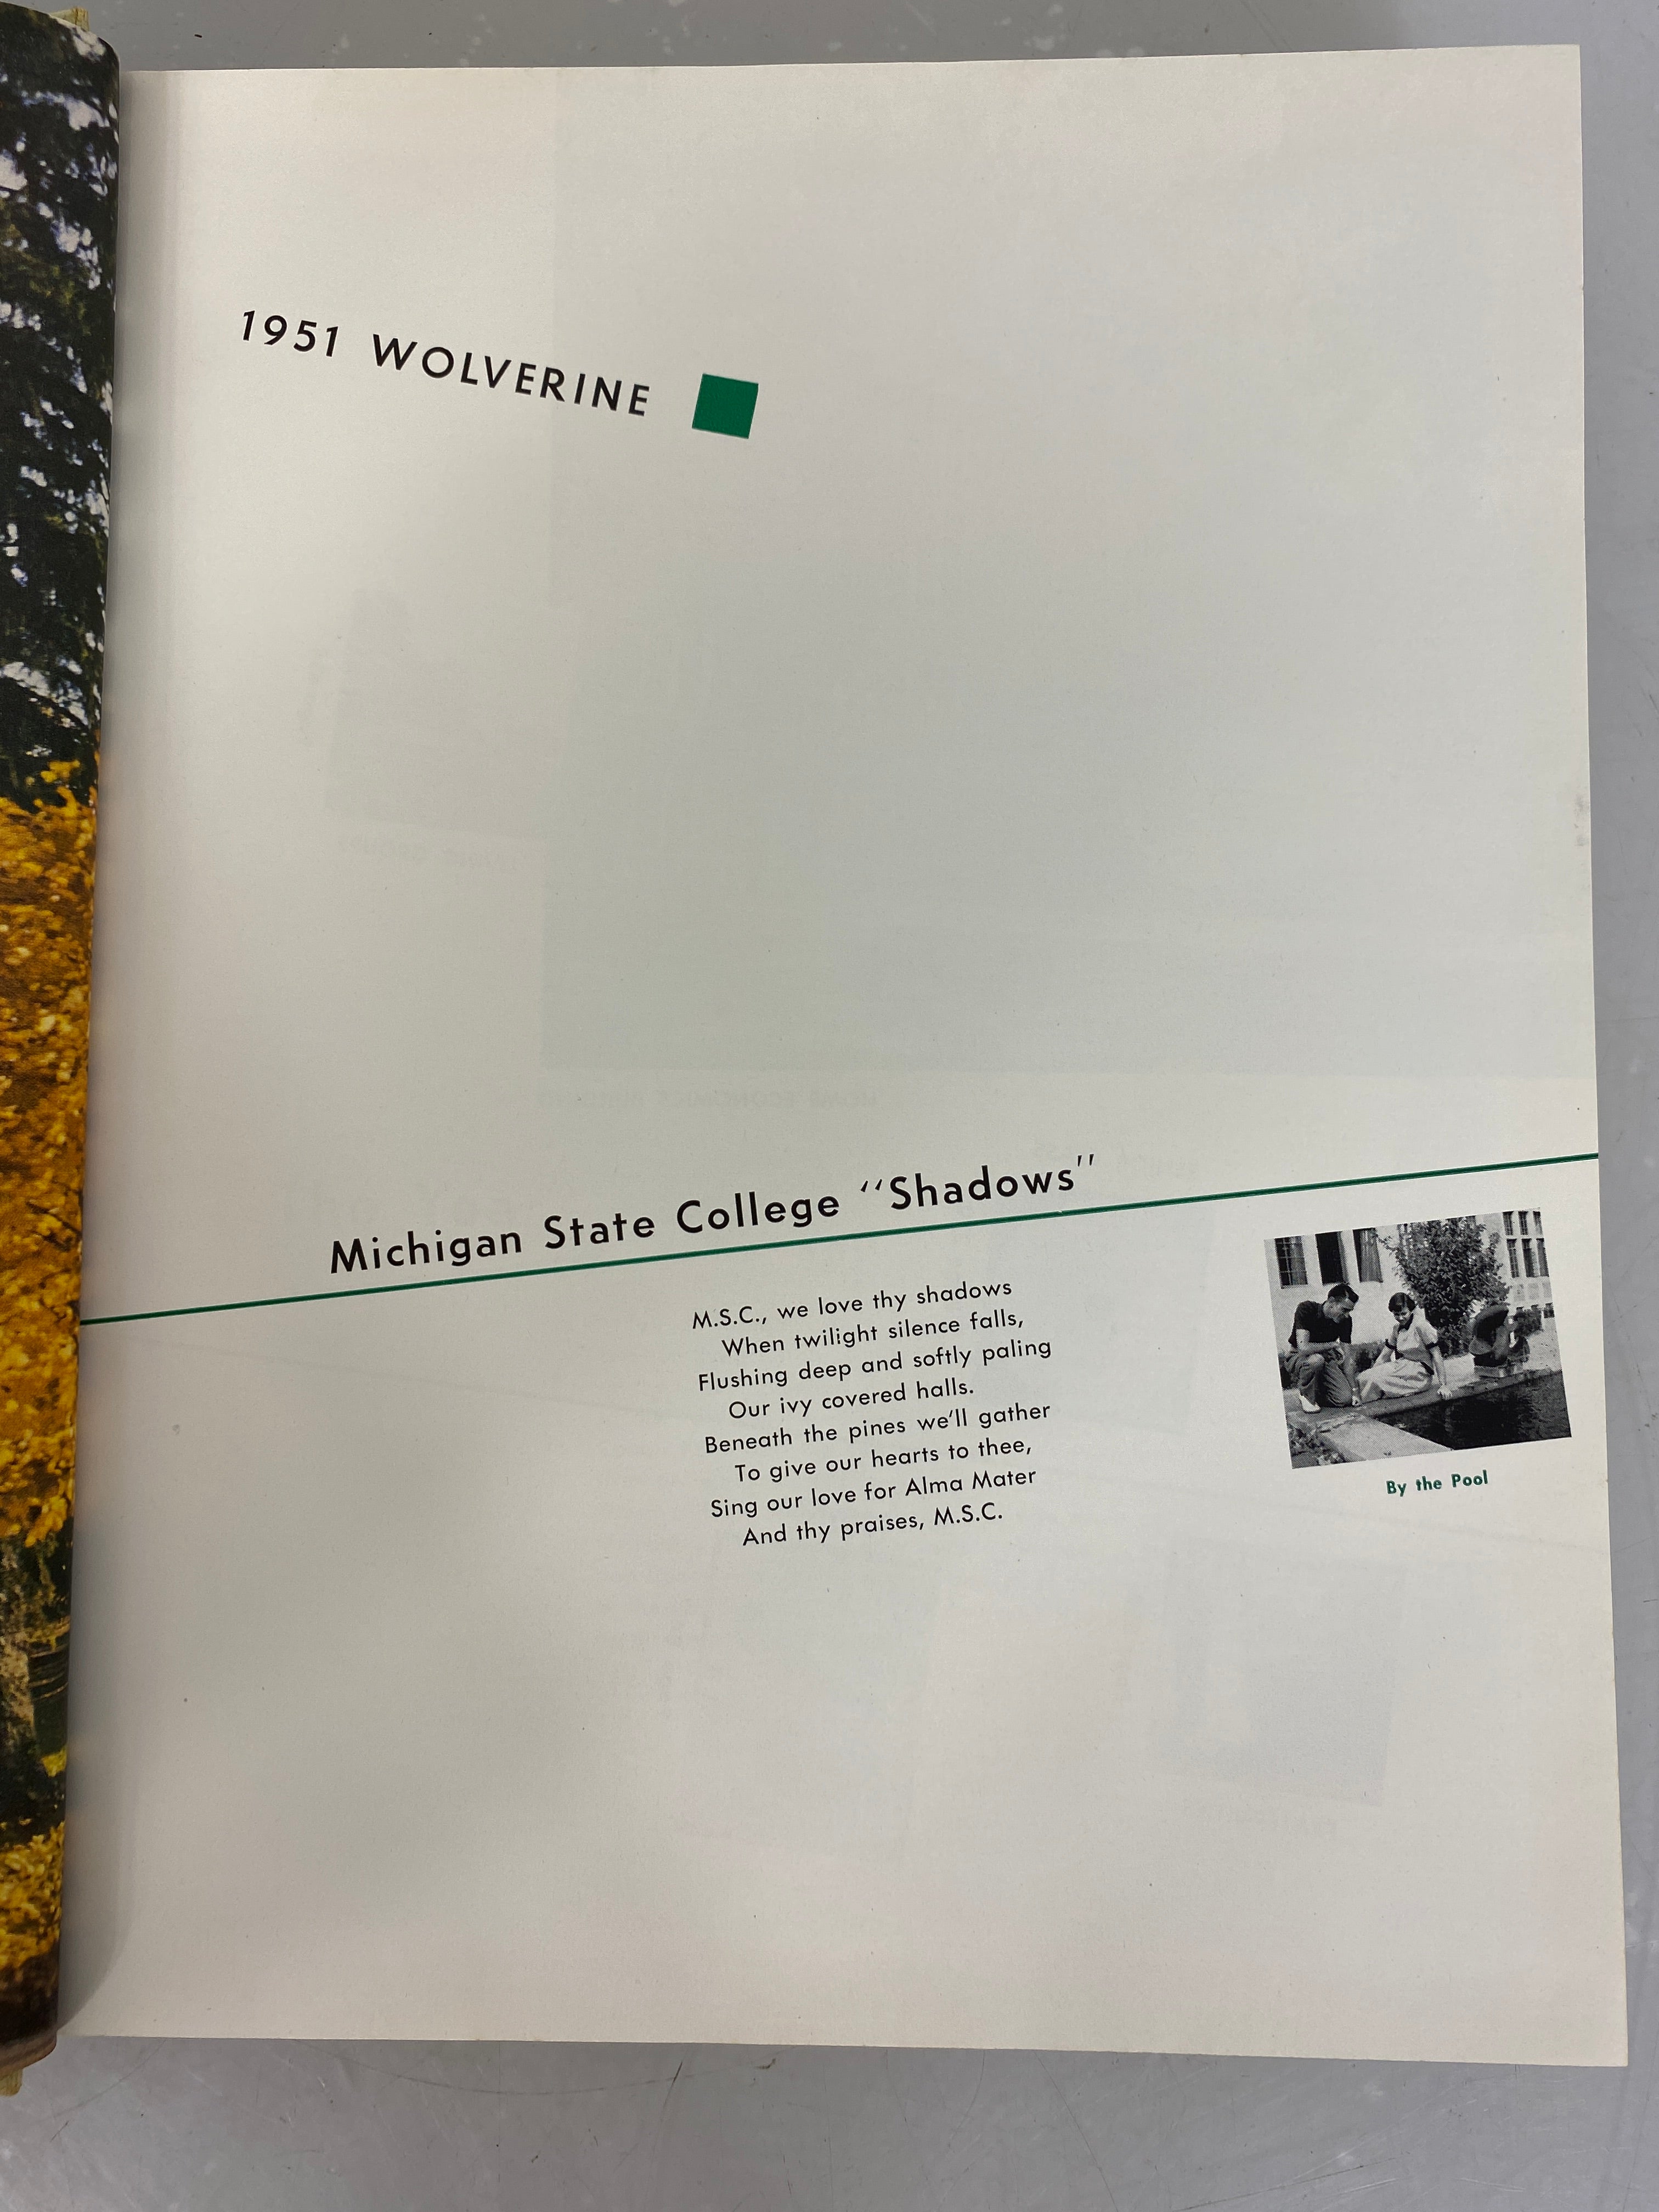 1951 Michigan State College Yearbook Wolverine